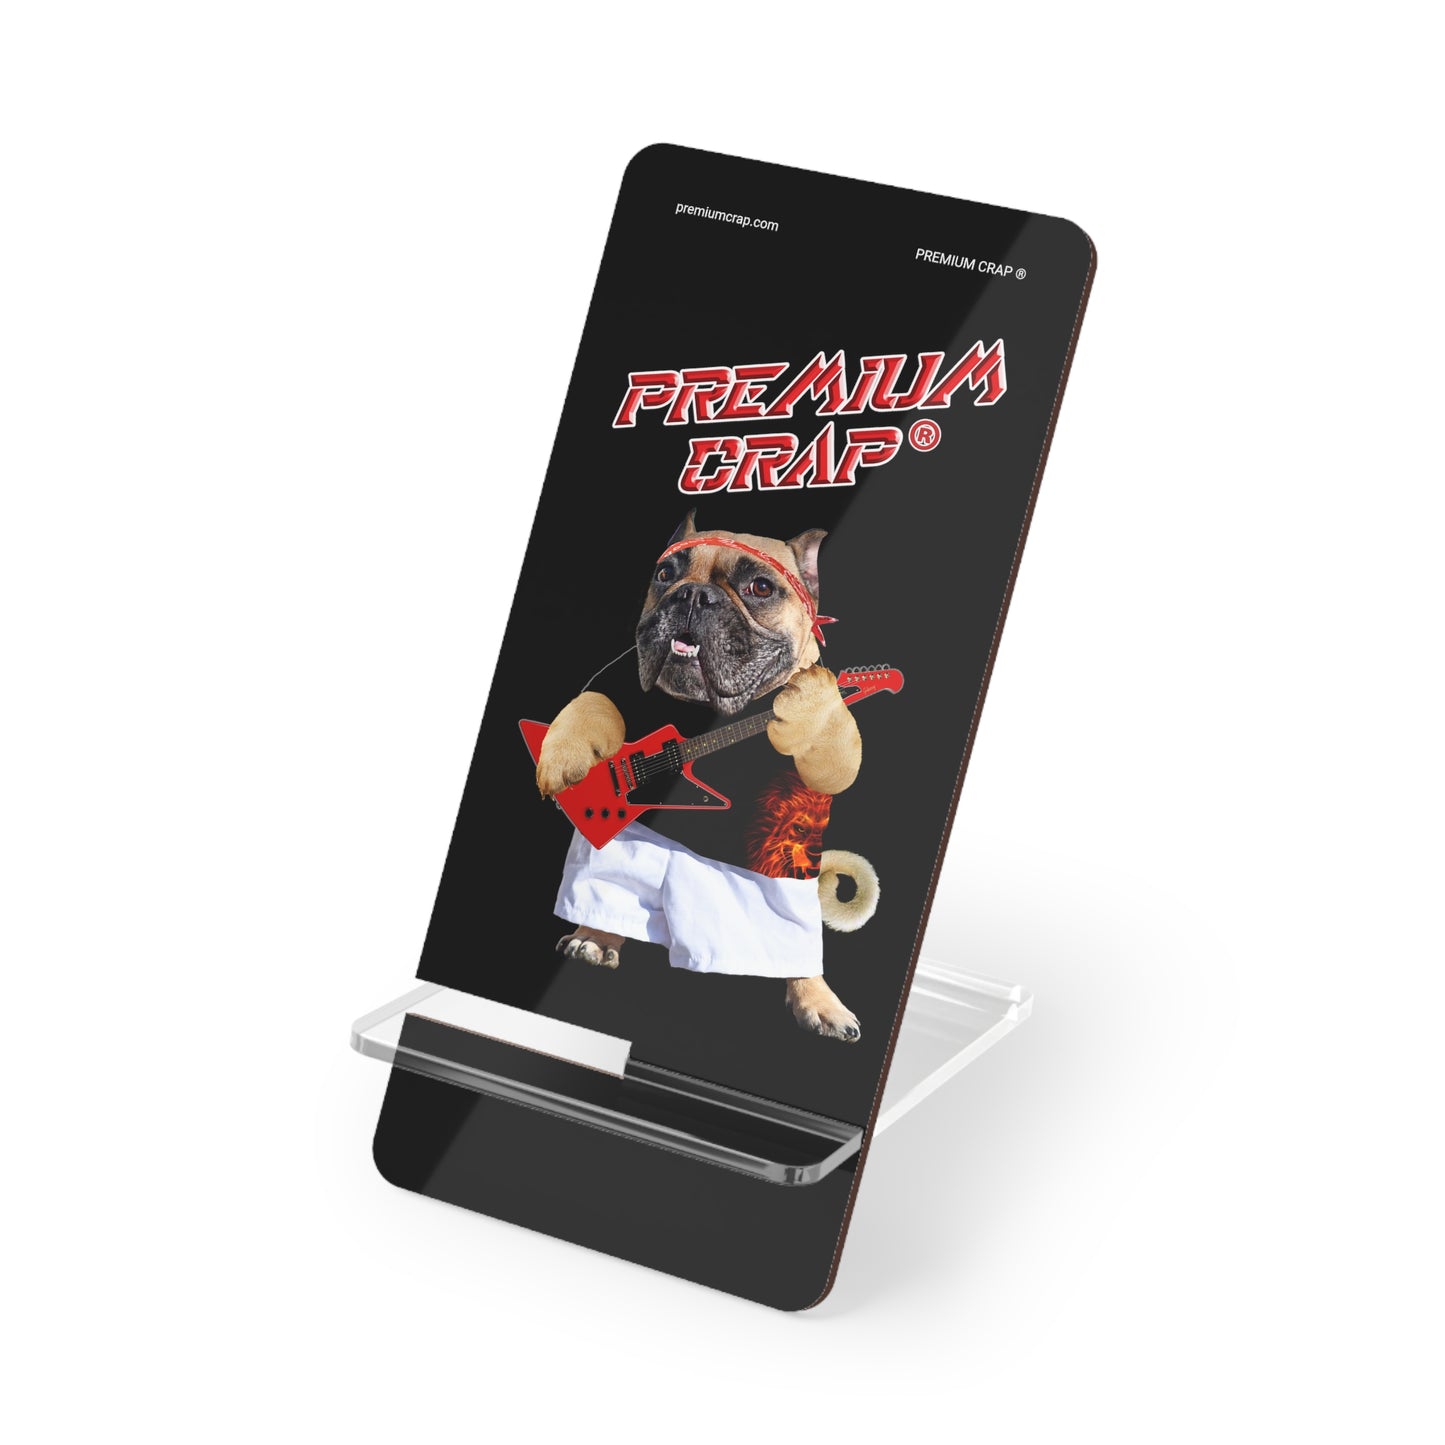 Premium Crap Mobile Display Stand for Smartphones